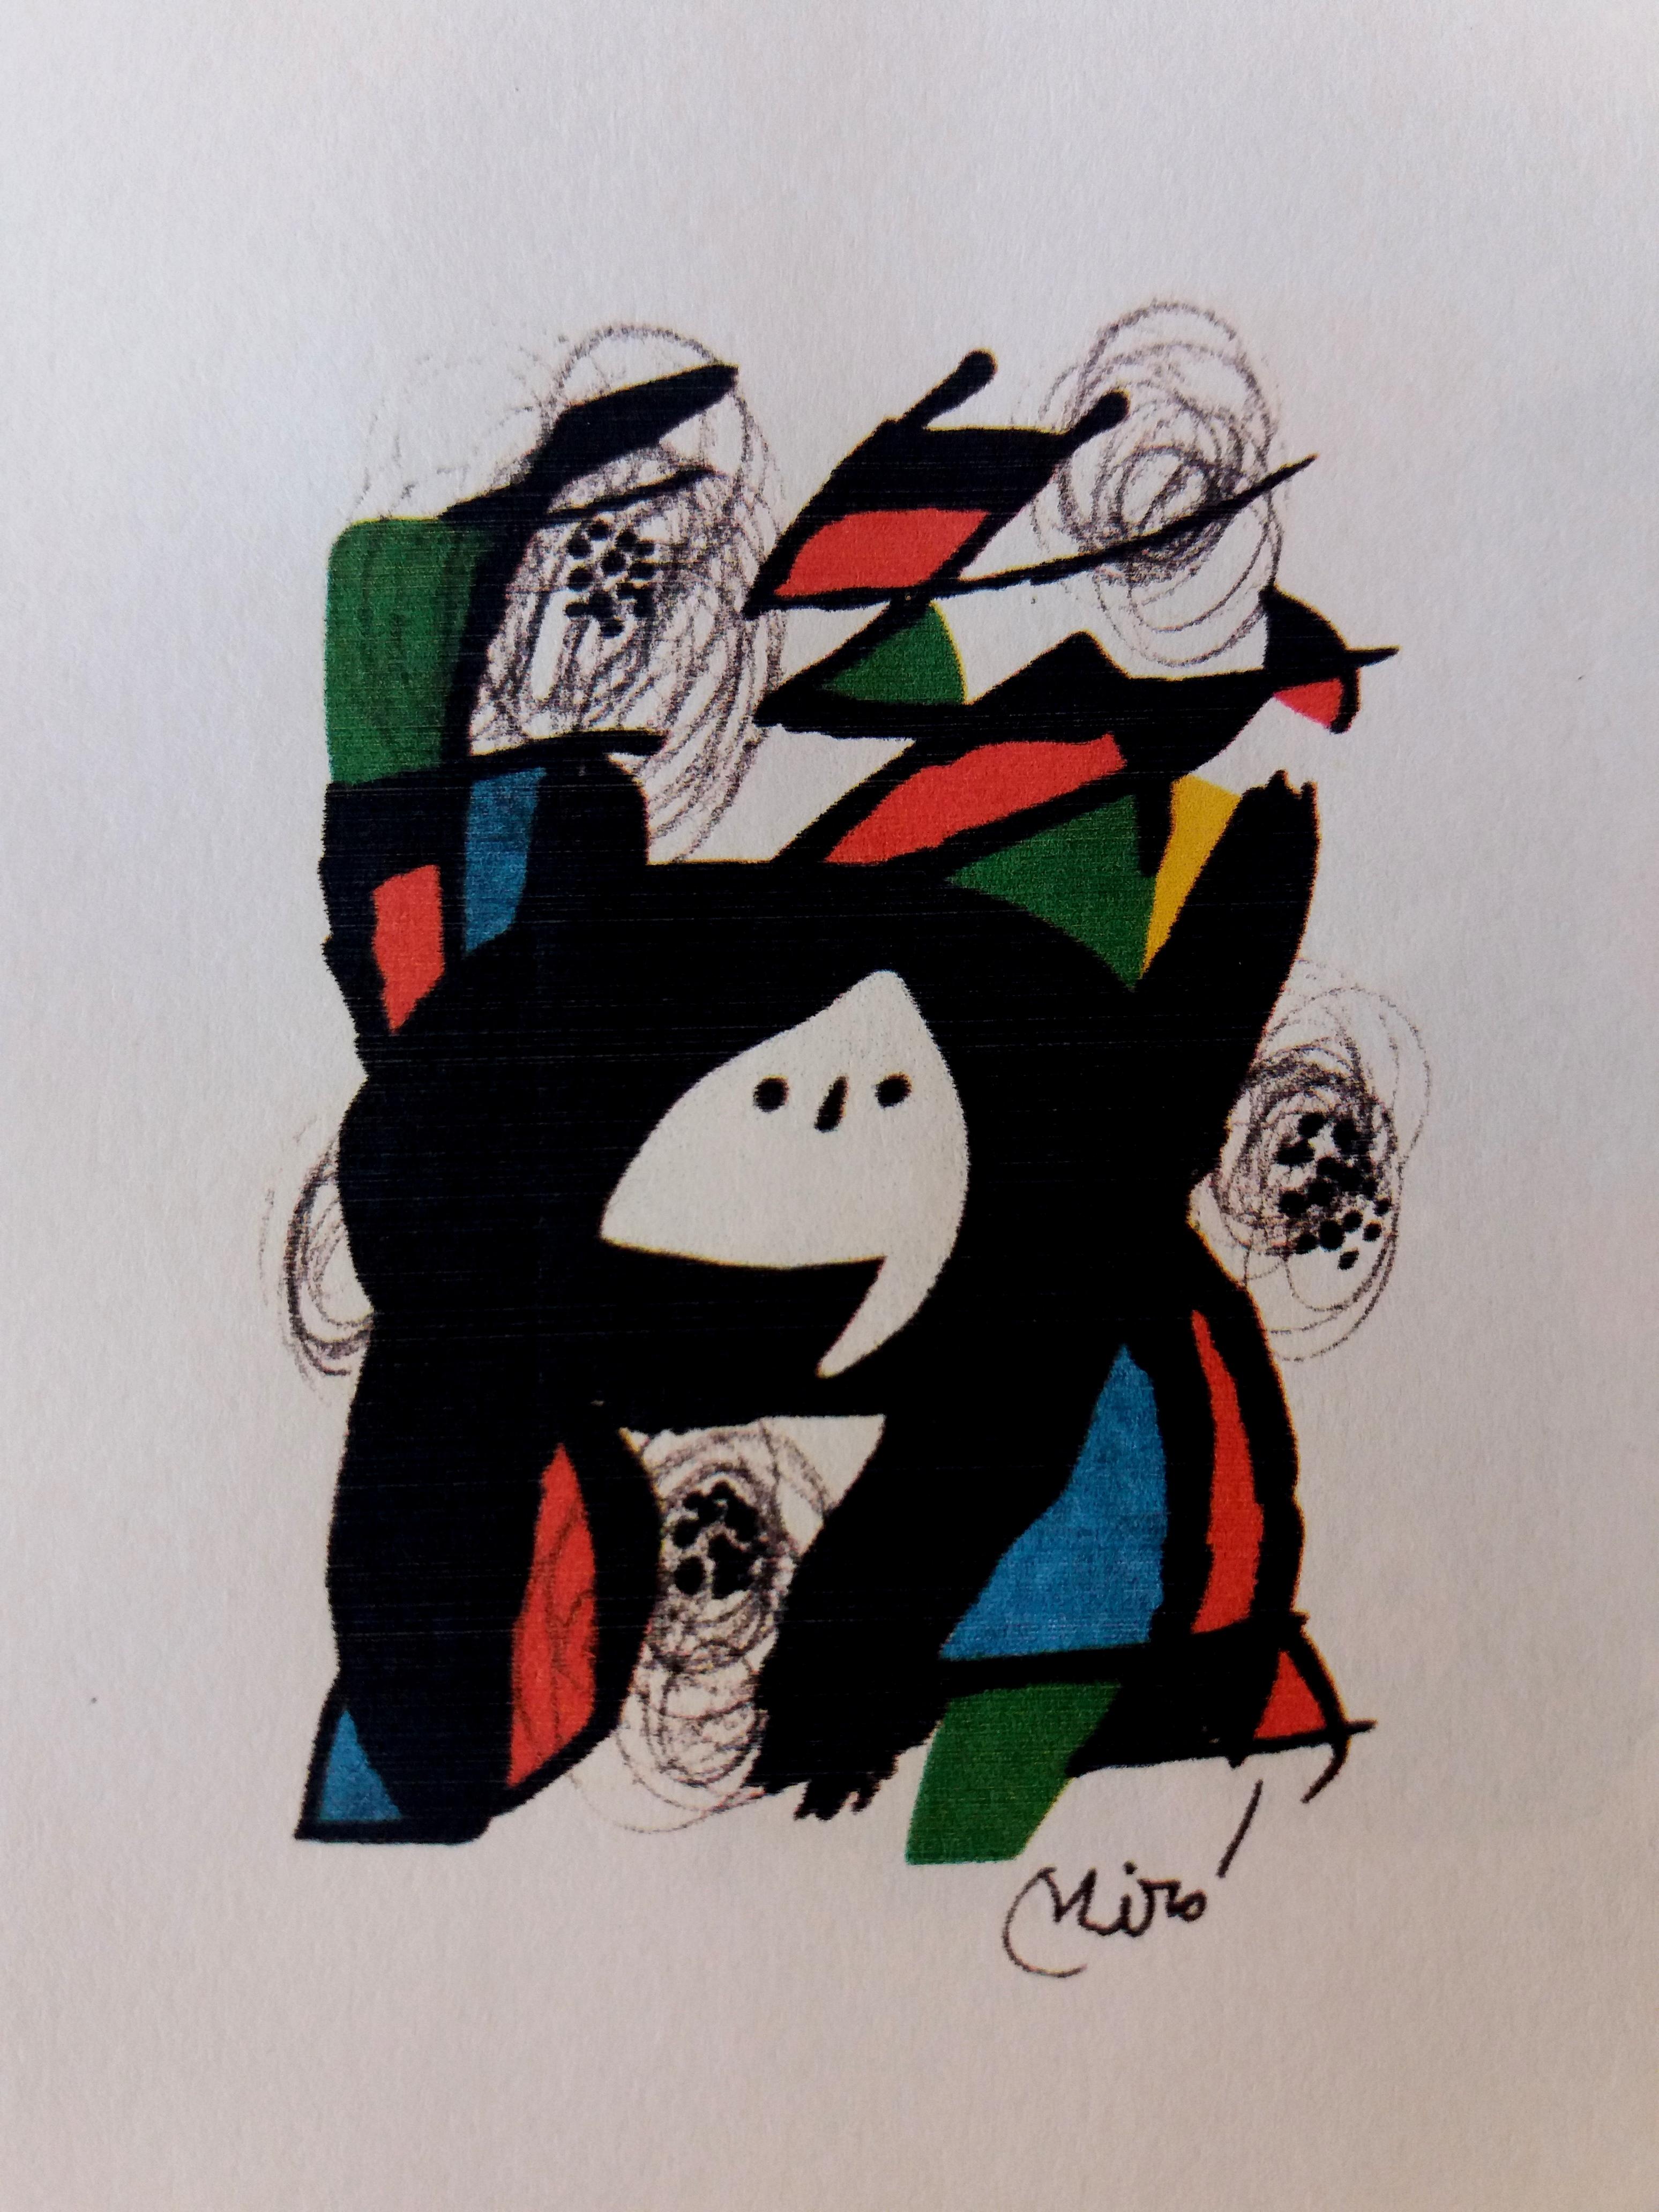 Joan Miró Abstract Print - Miro   La melodie acide. lithograph